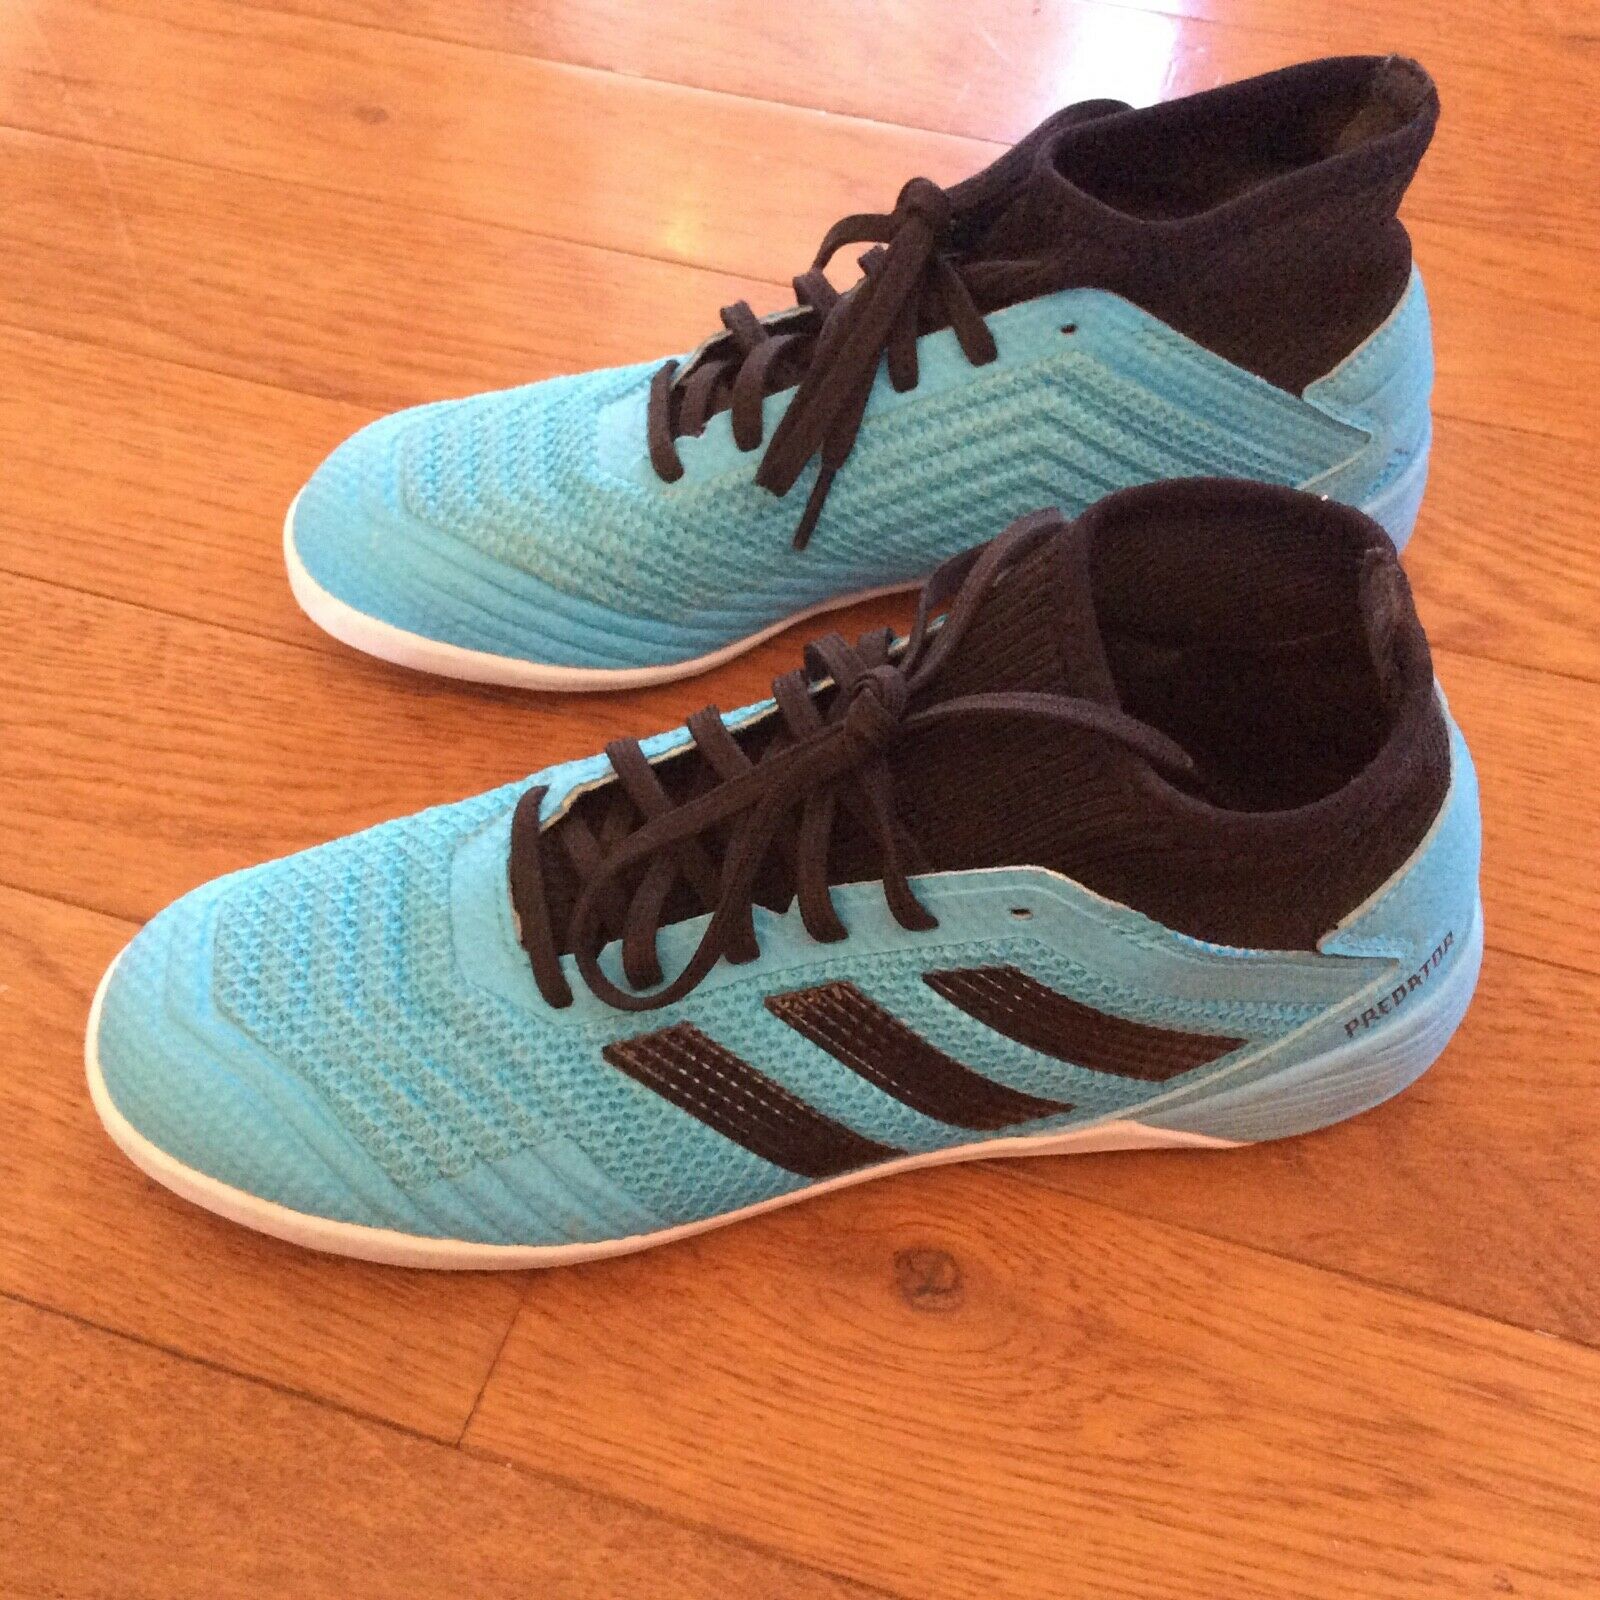 Adidas Predator 19.3 Indoor/Futsol Soccer Shoes, Blue/Black, Men’s size 6.5